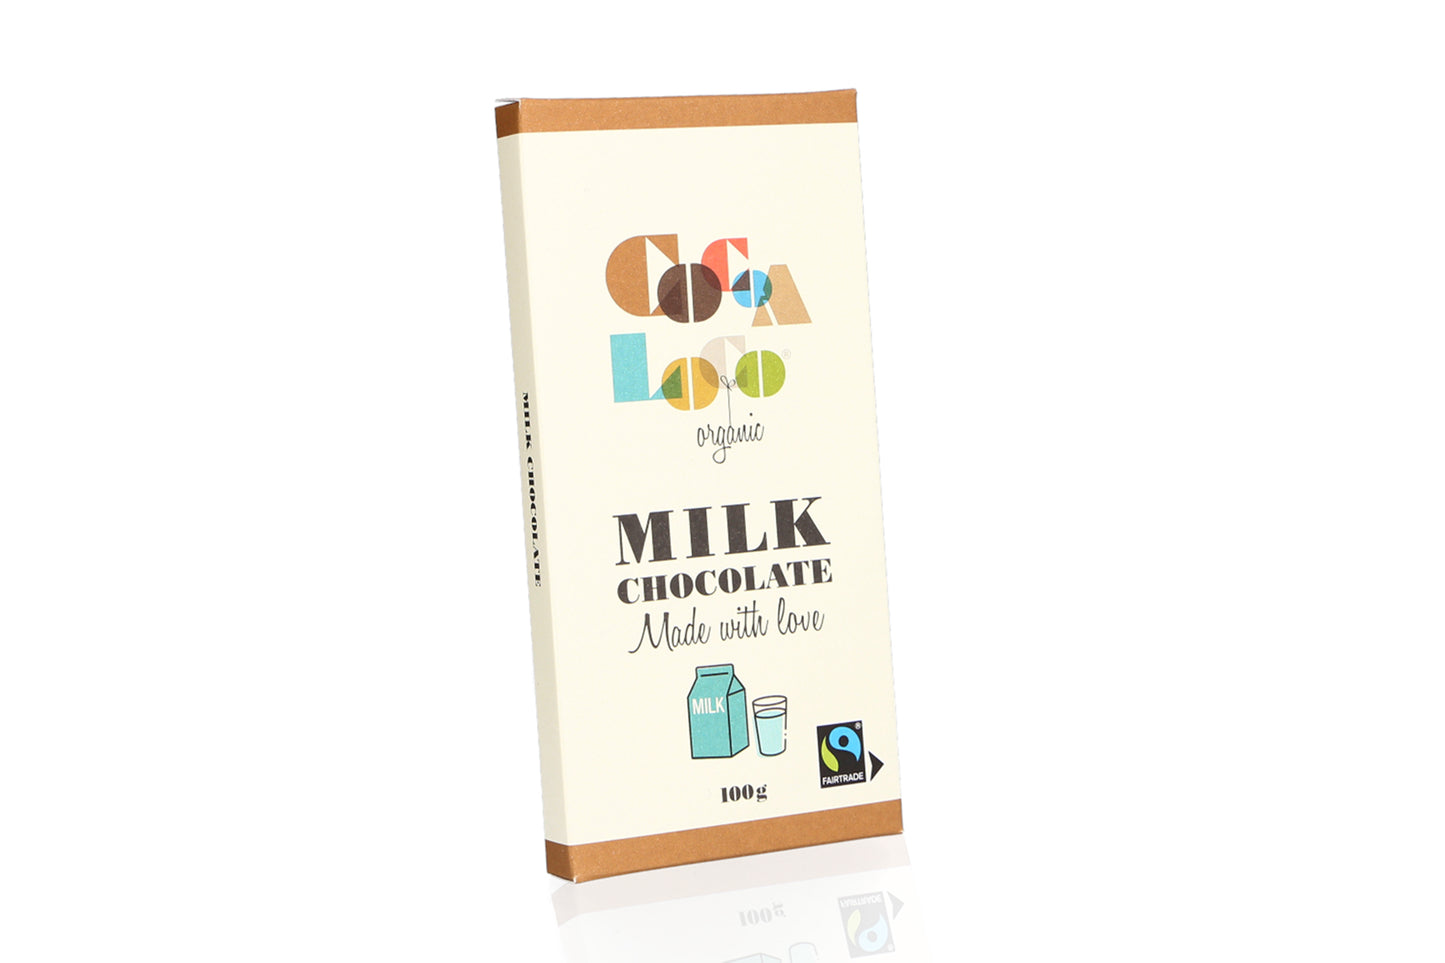 Cocoa Metro—Chocolate Milk Maker Bundle